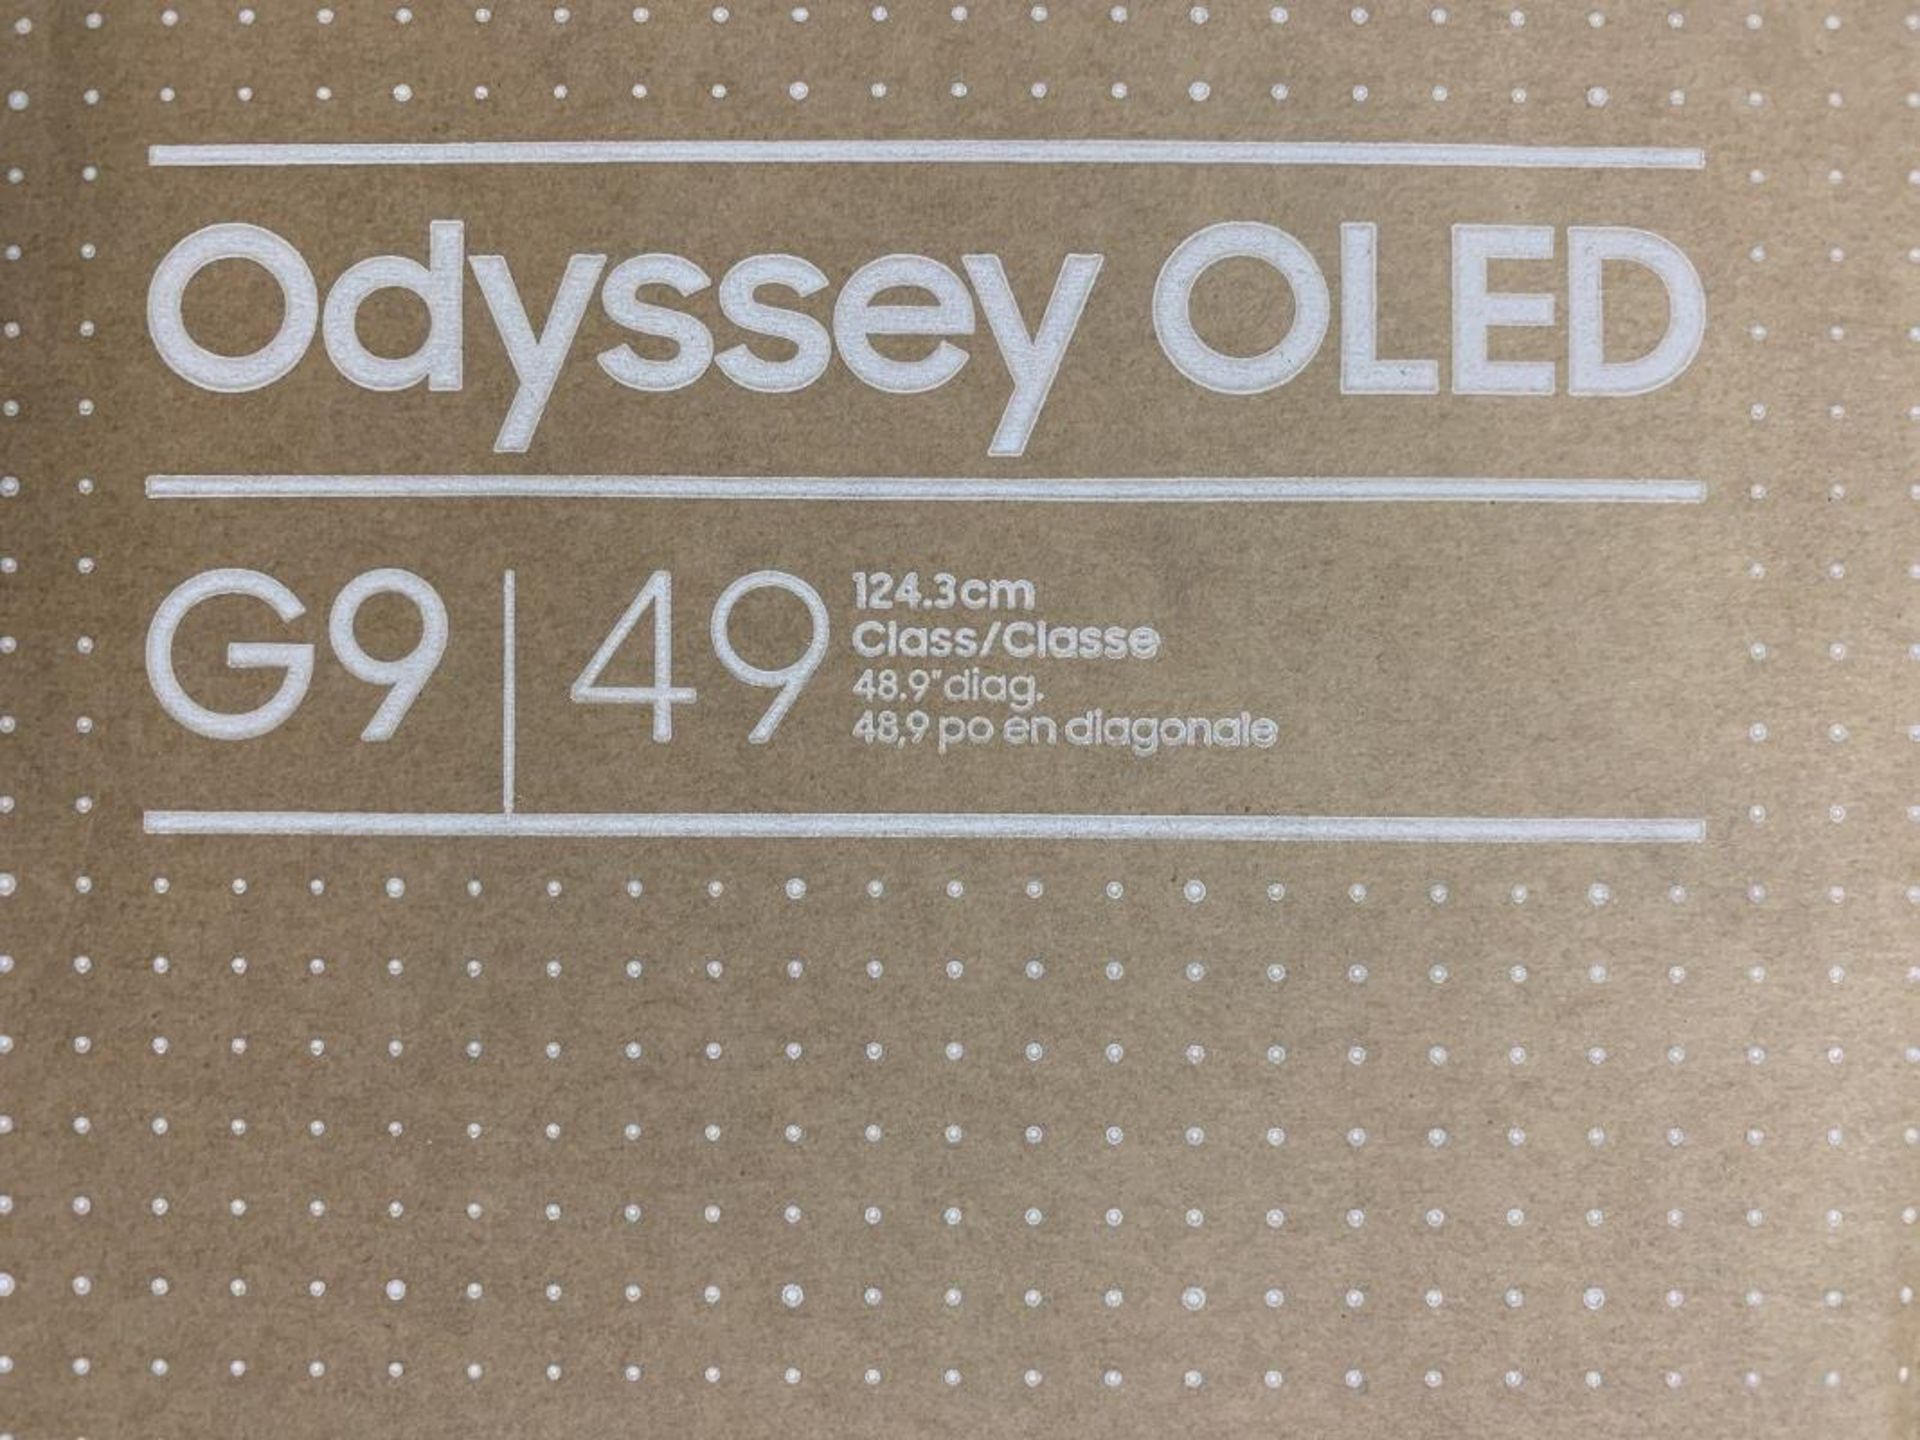 Samsung - Odyssey Oled - 49" G9 Gaming Monitor - Image 3 of 3